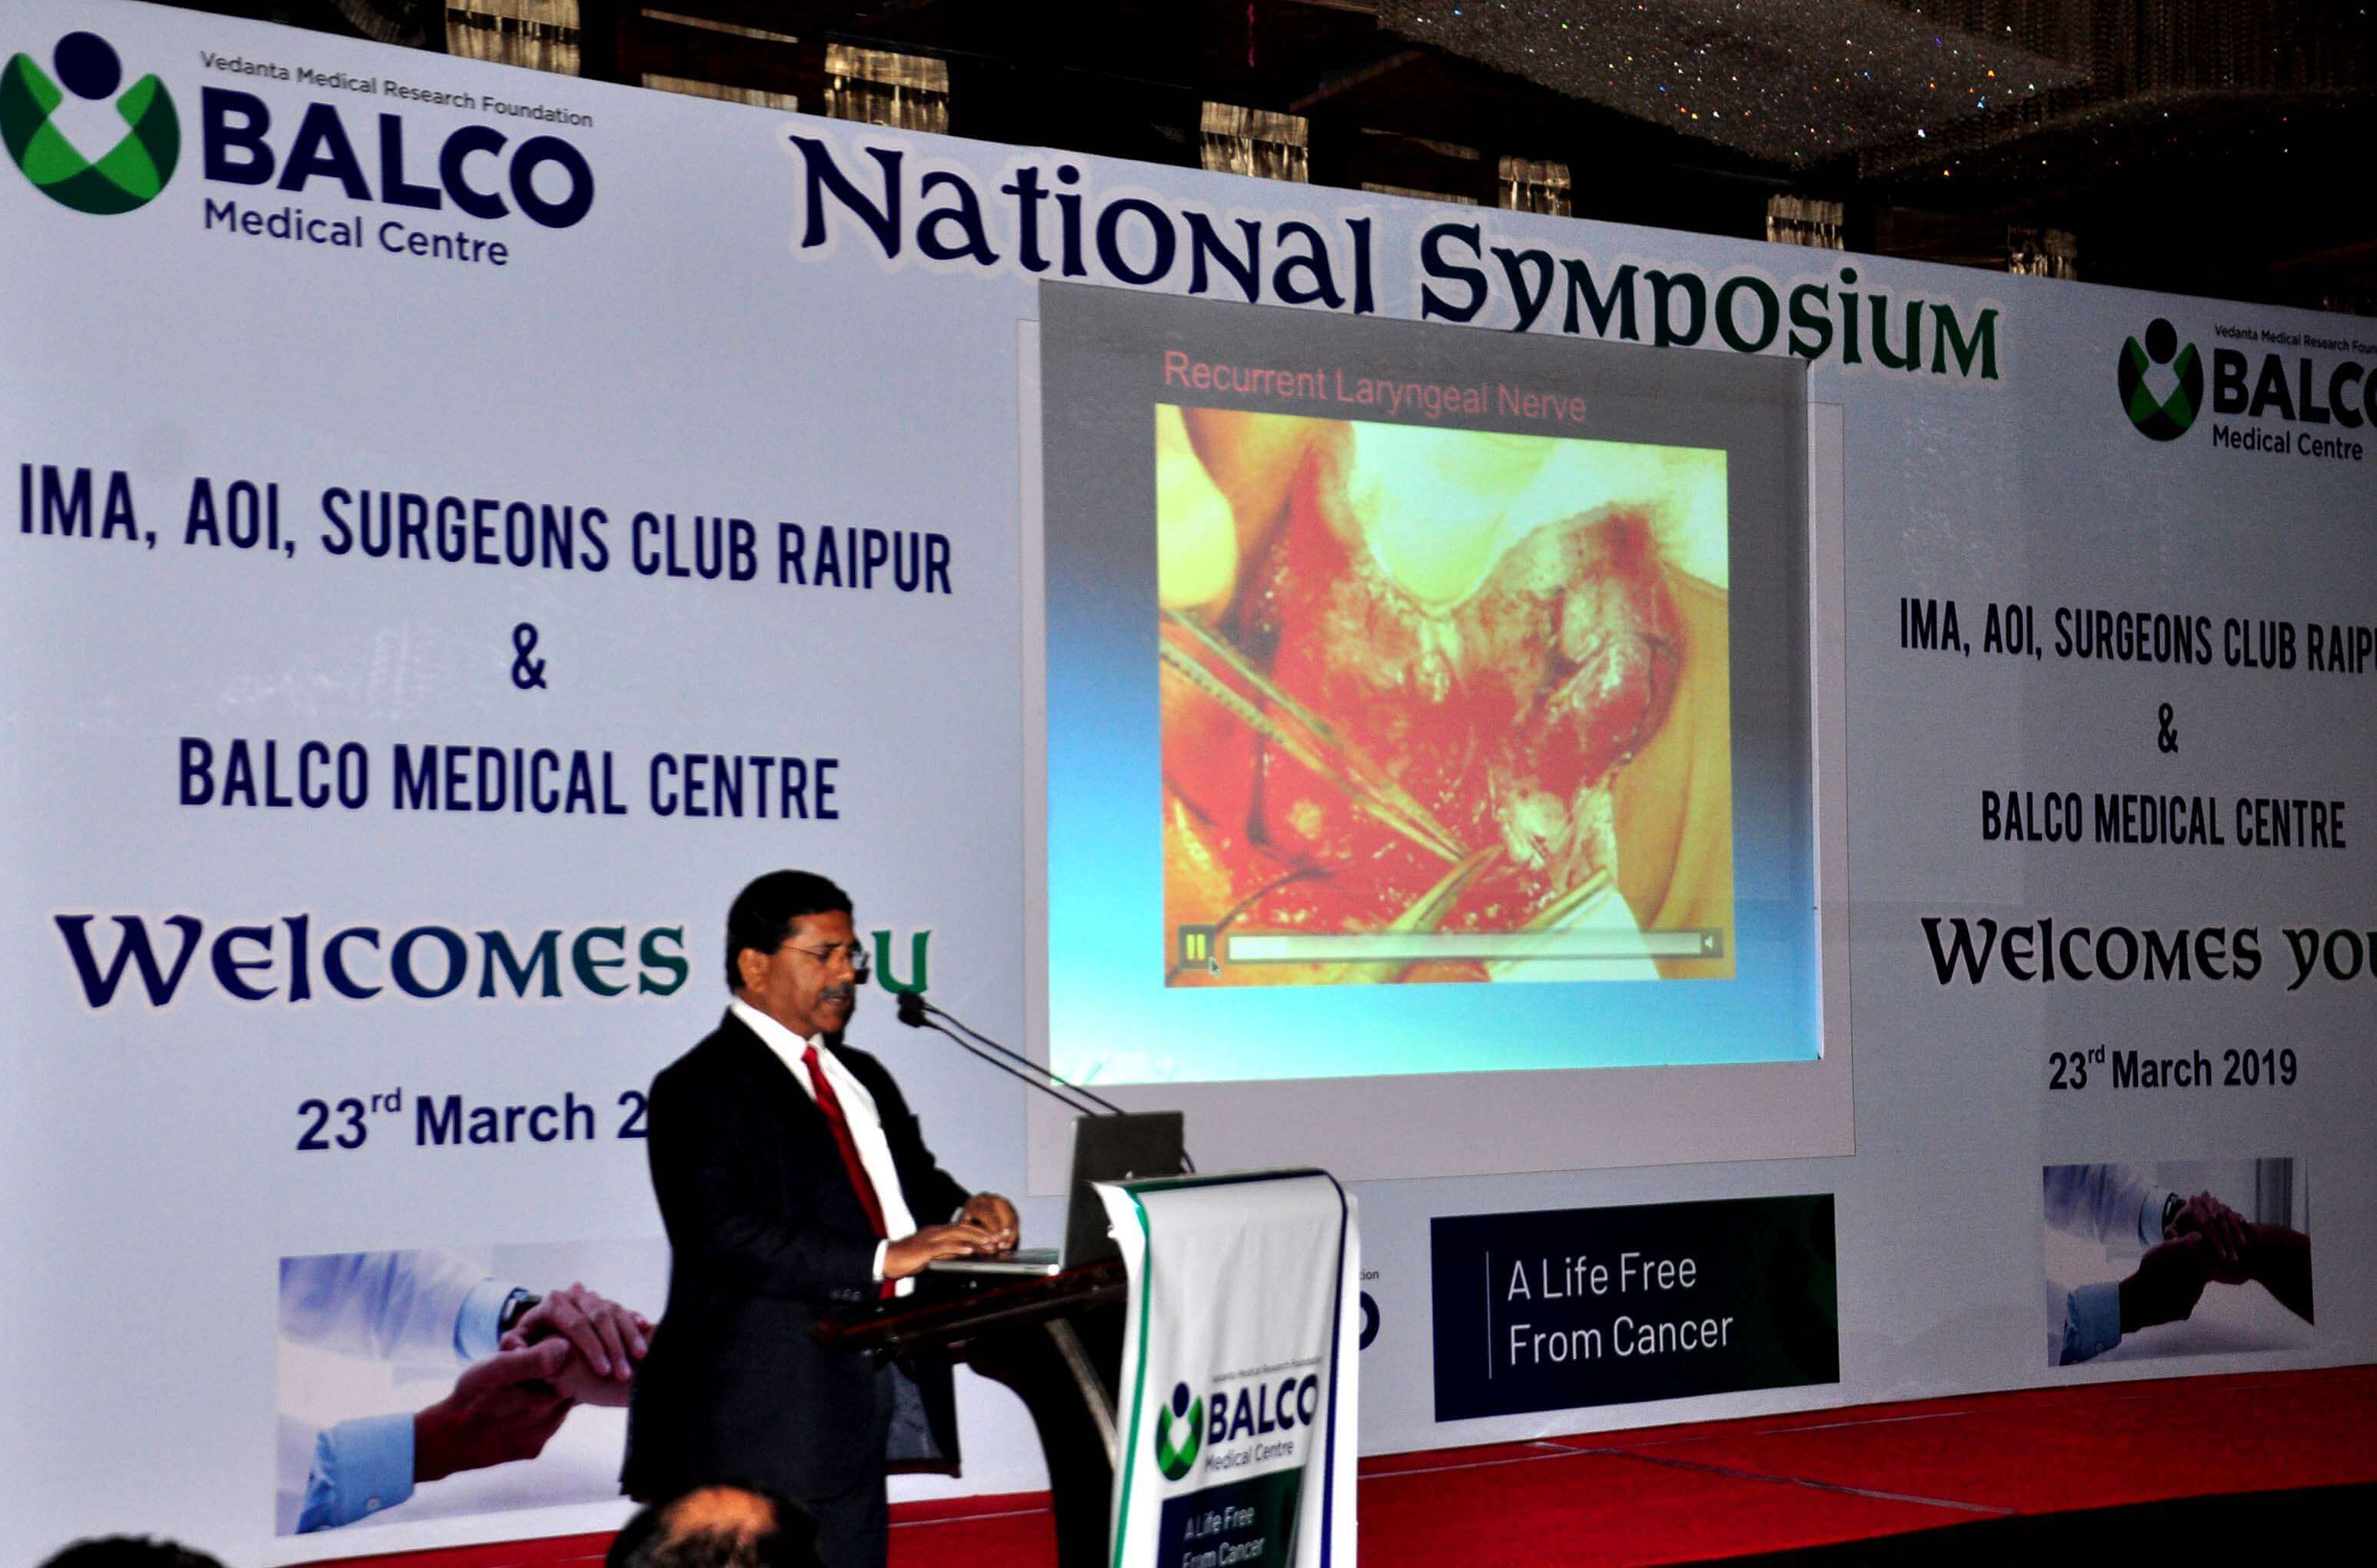 National Symposium